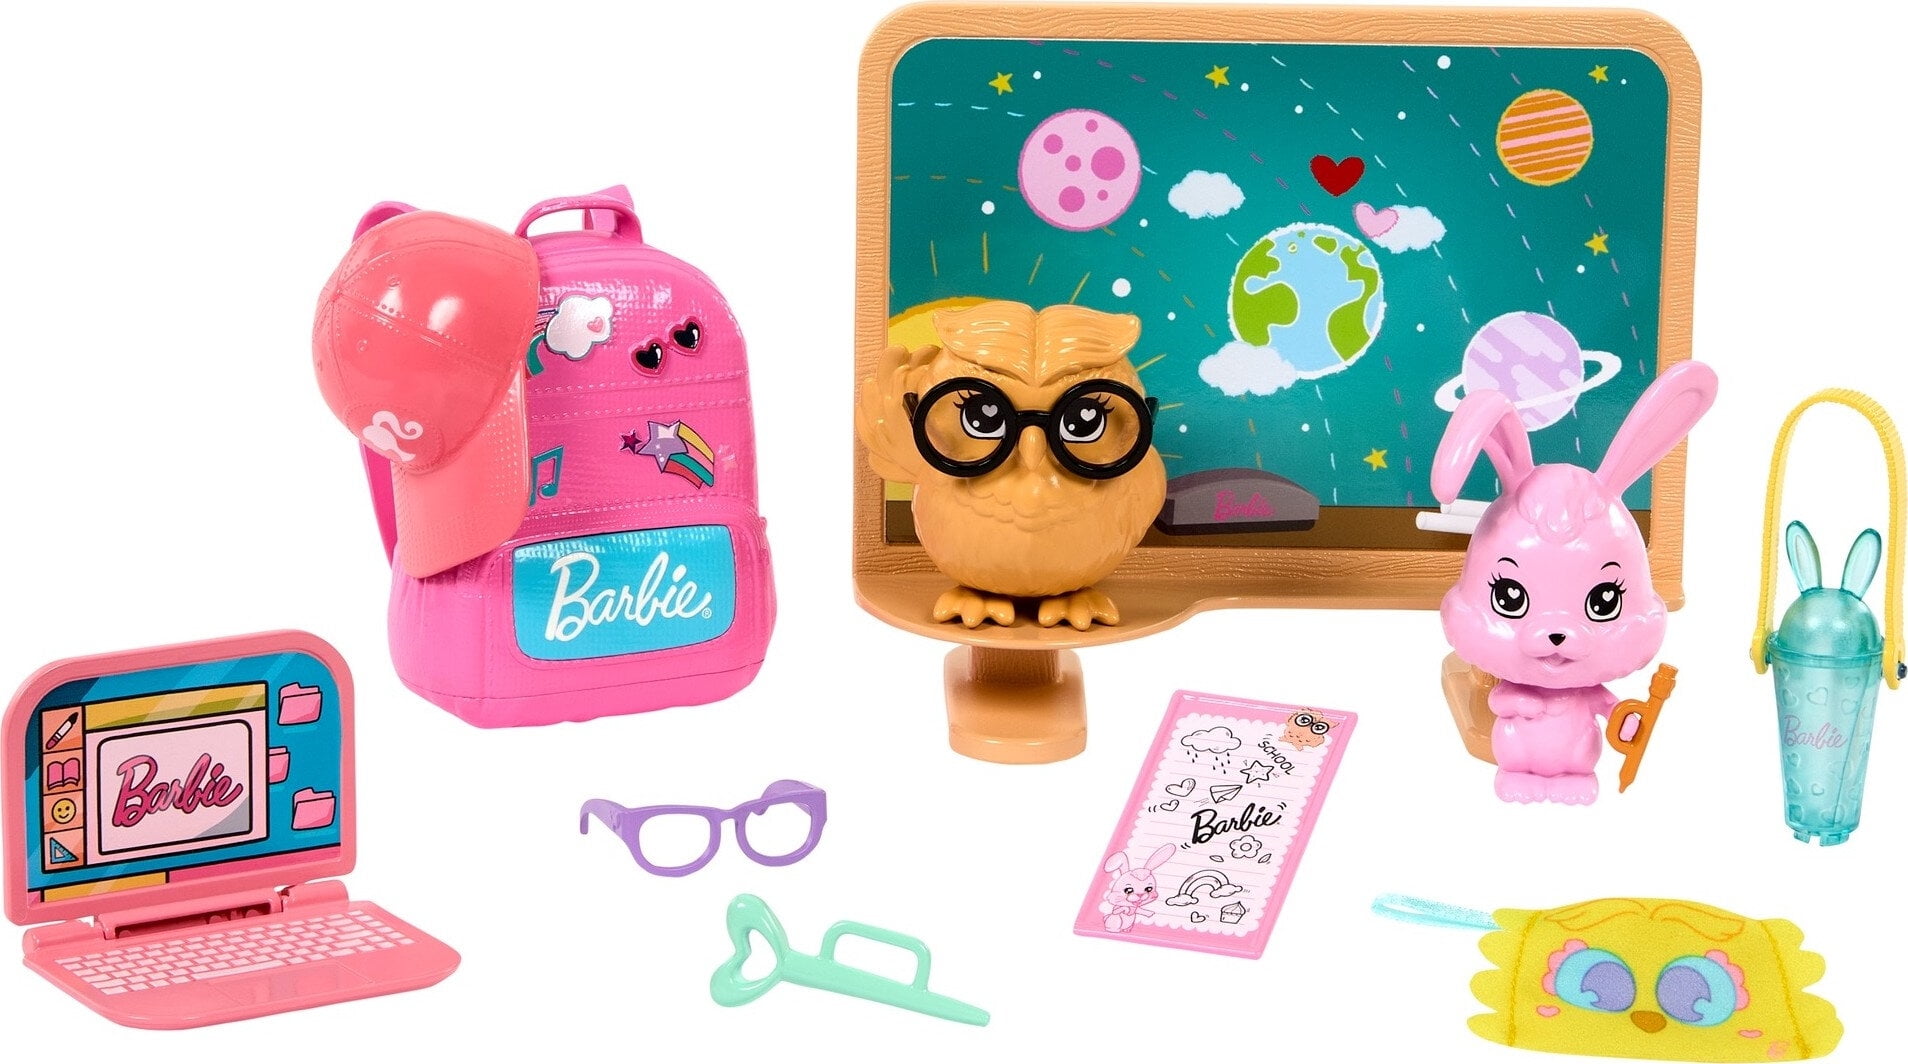 My First Barbie School Accessories for Preschool Dolls, Chalkboard & Classroom Pets, 13.5-inch Scale